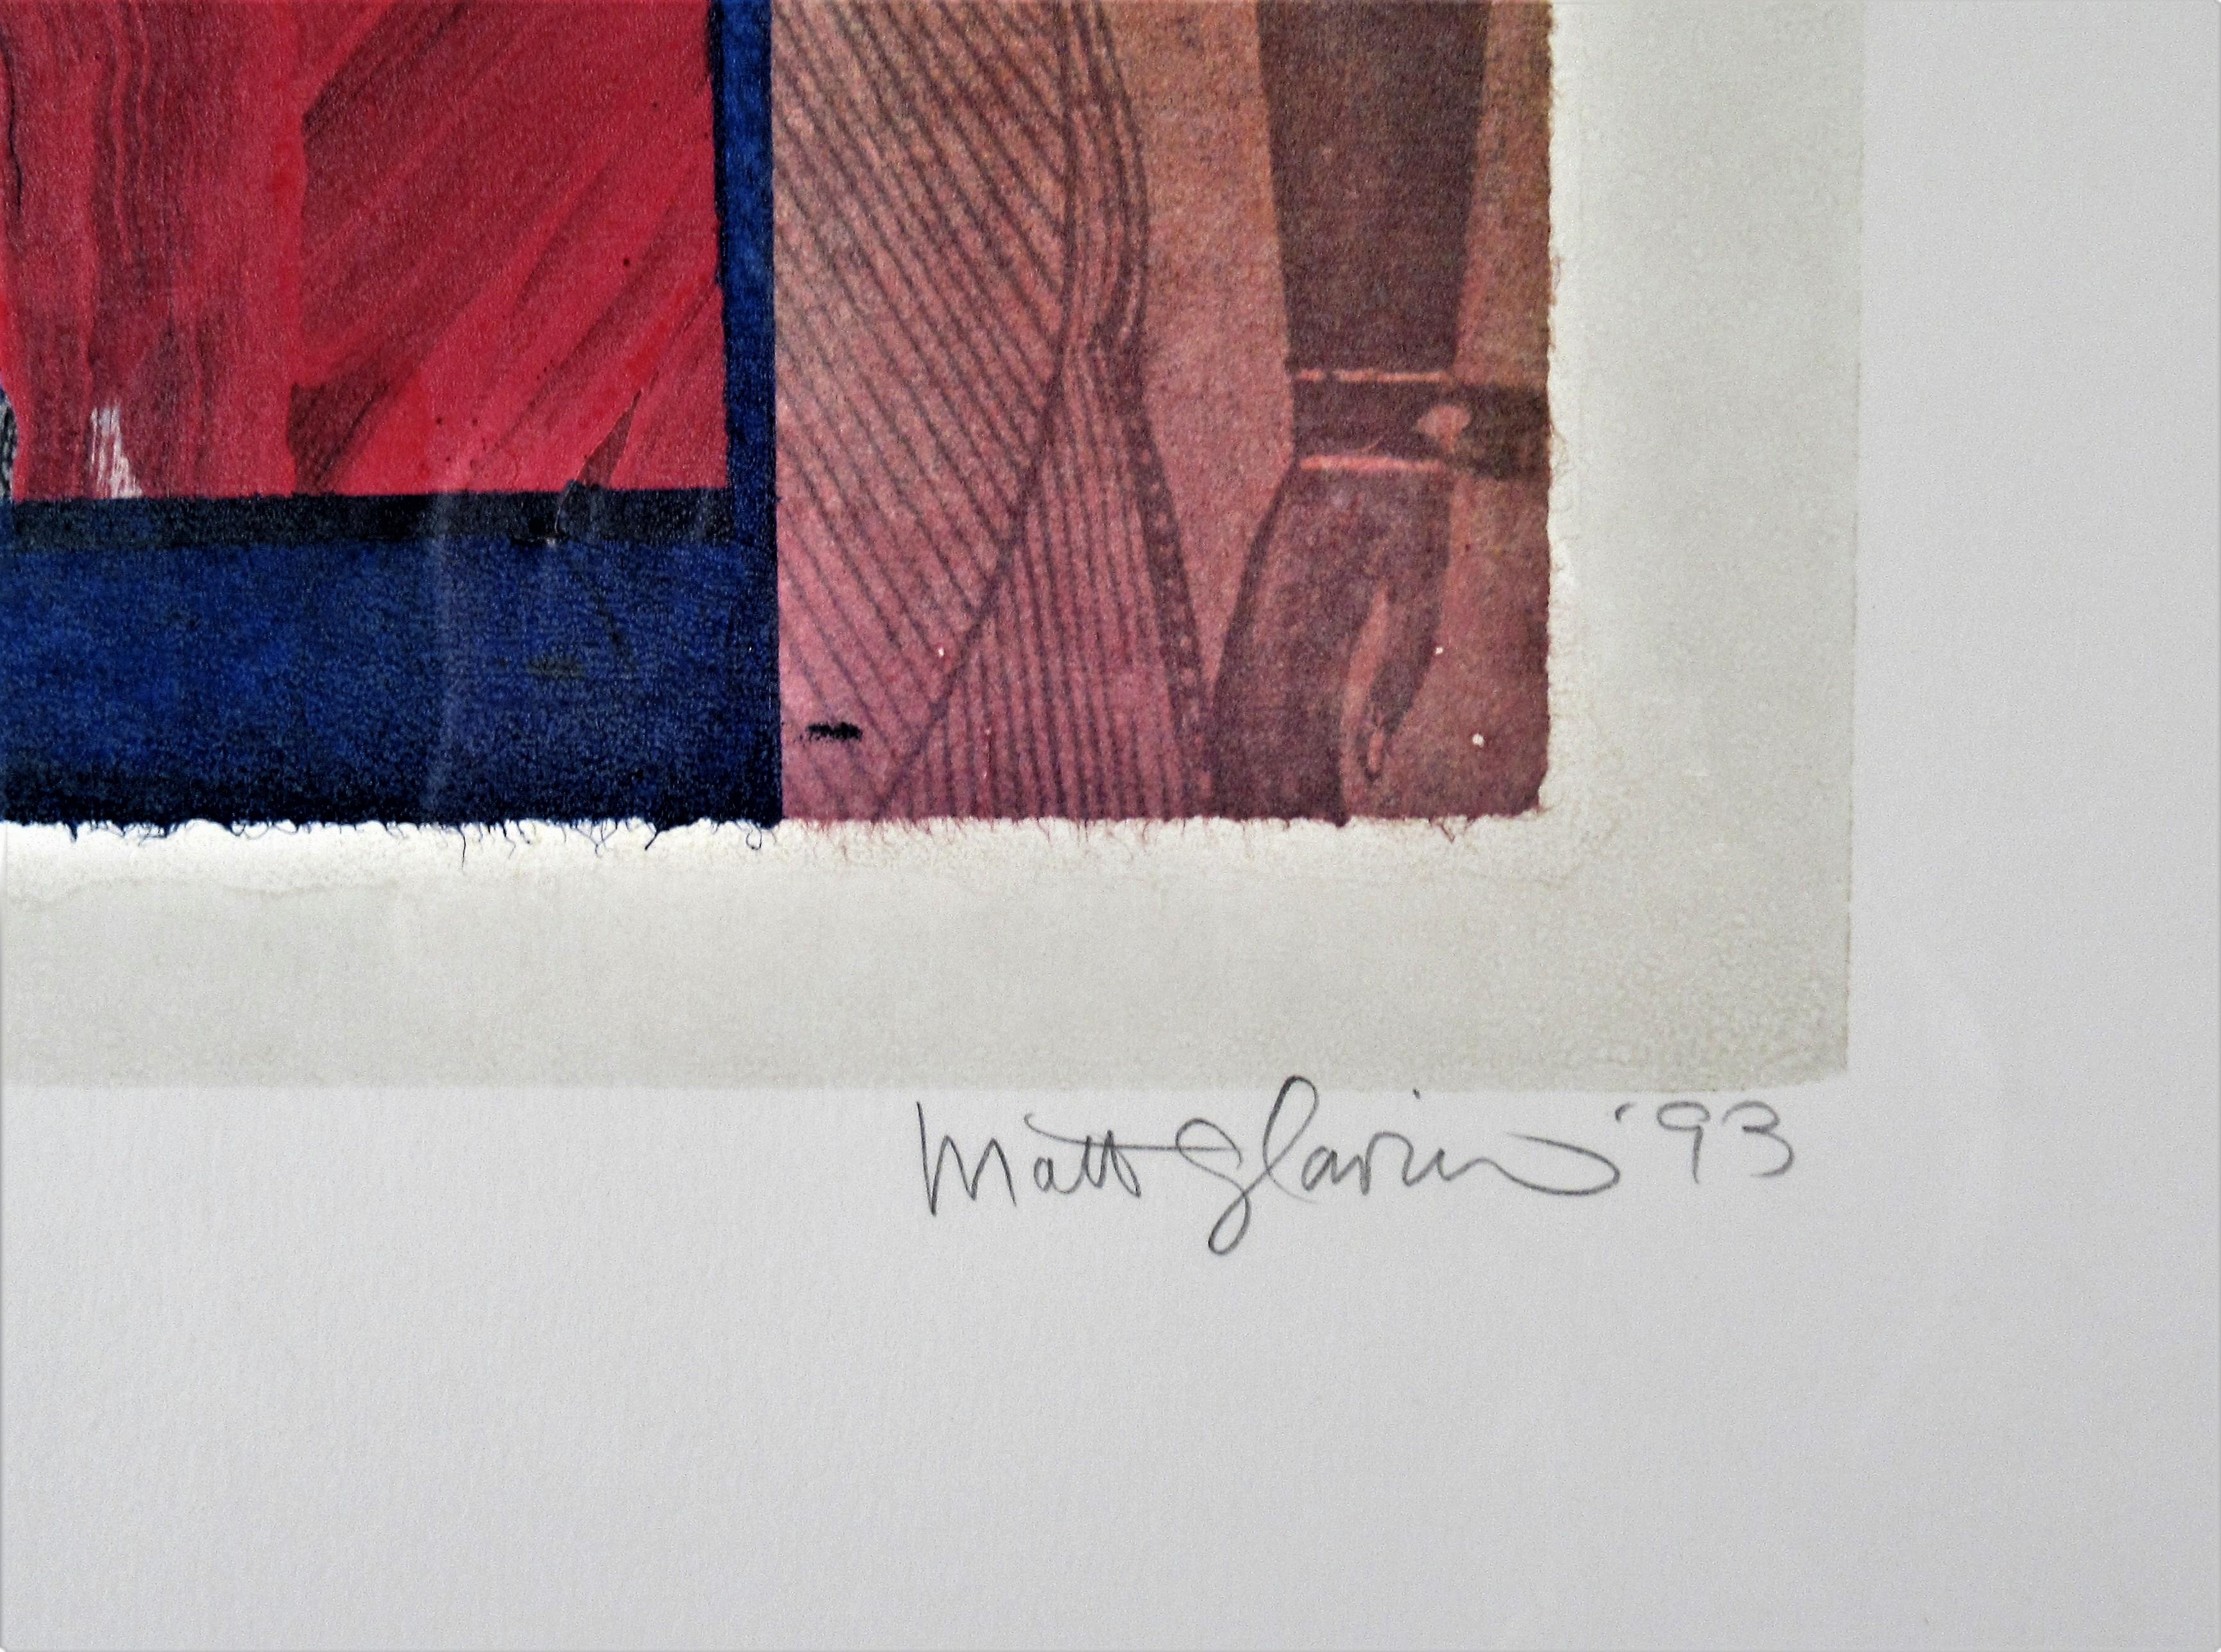 Ramsesses 3 - Abstract Expressionist Mixed Media Art by Matt Glavin